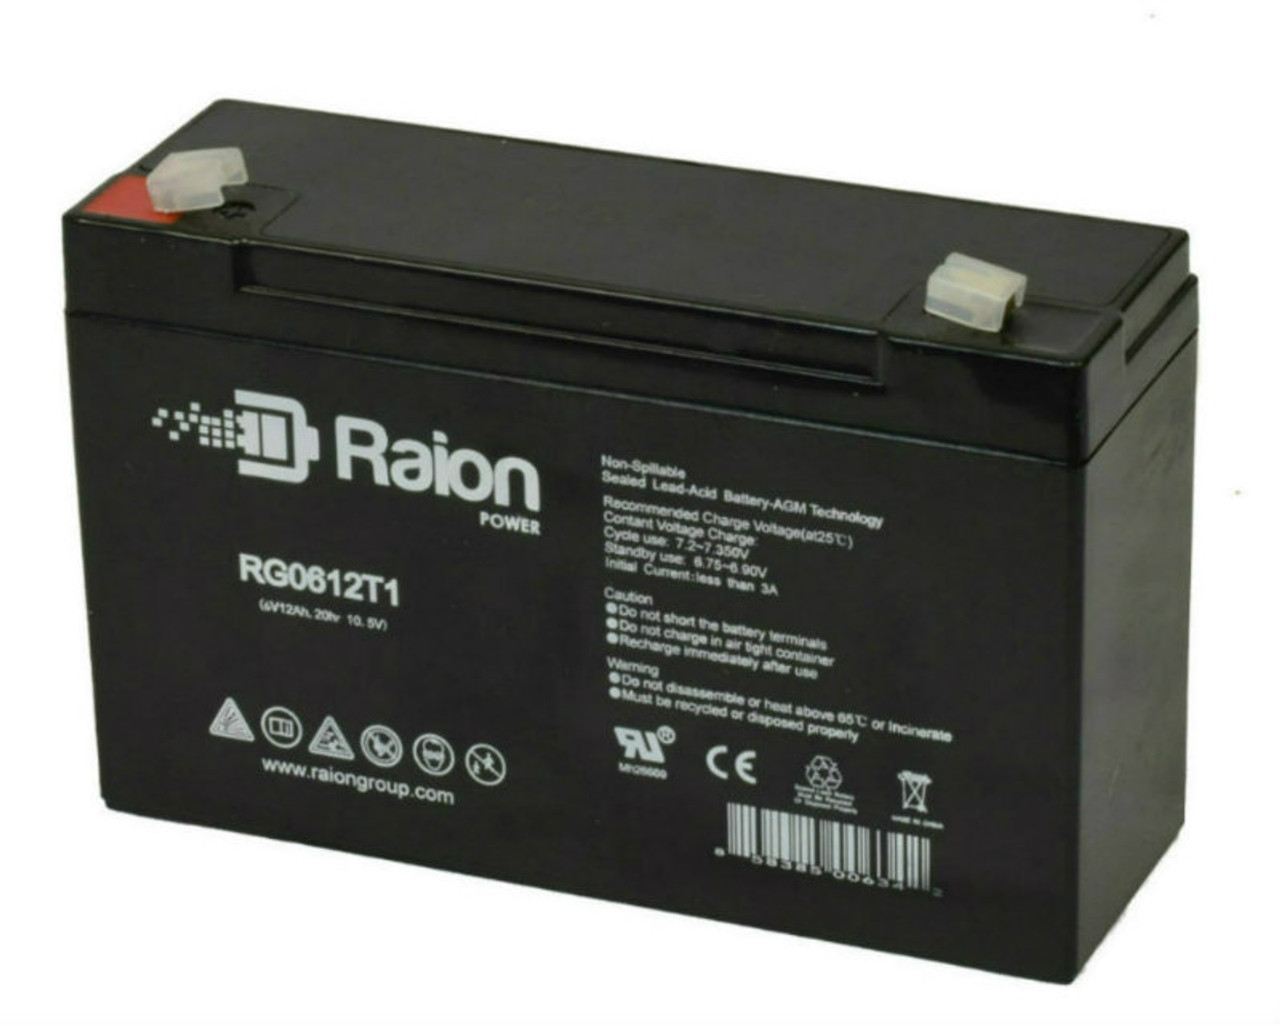 Raion Power RG06120T1 Replacement 6V 12Ah Emergency Light Battery for Sonnenschein S1103